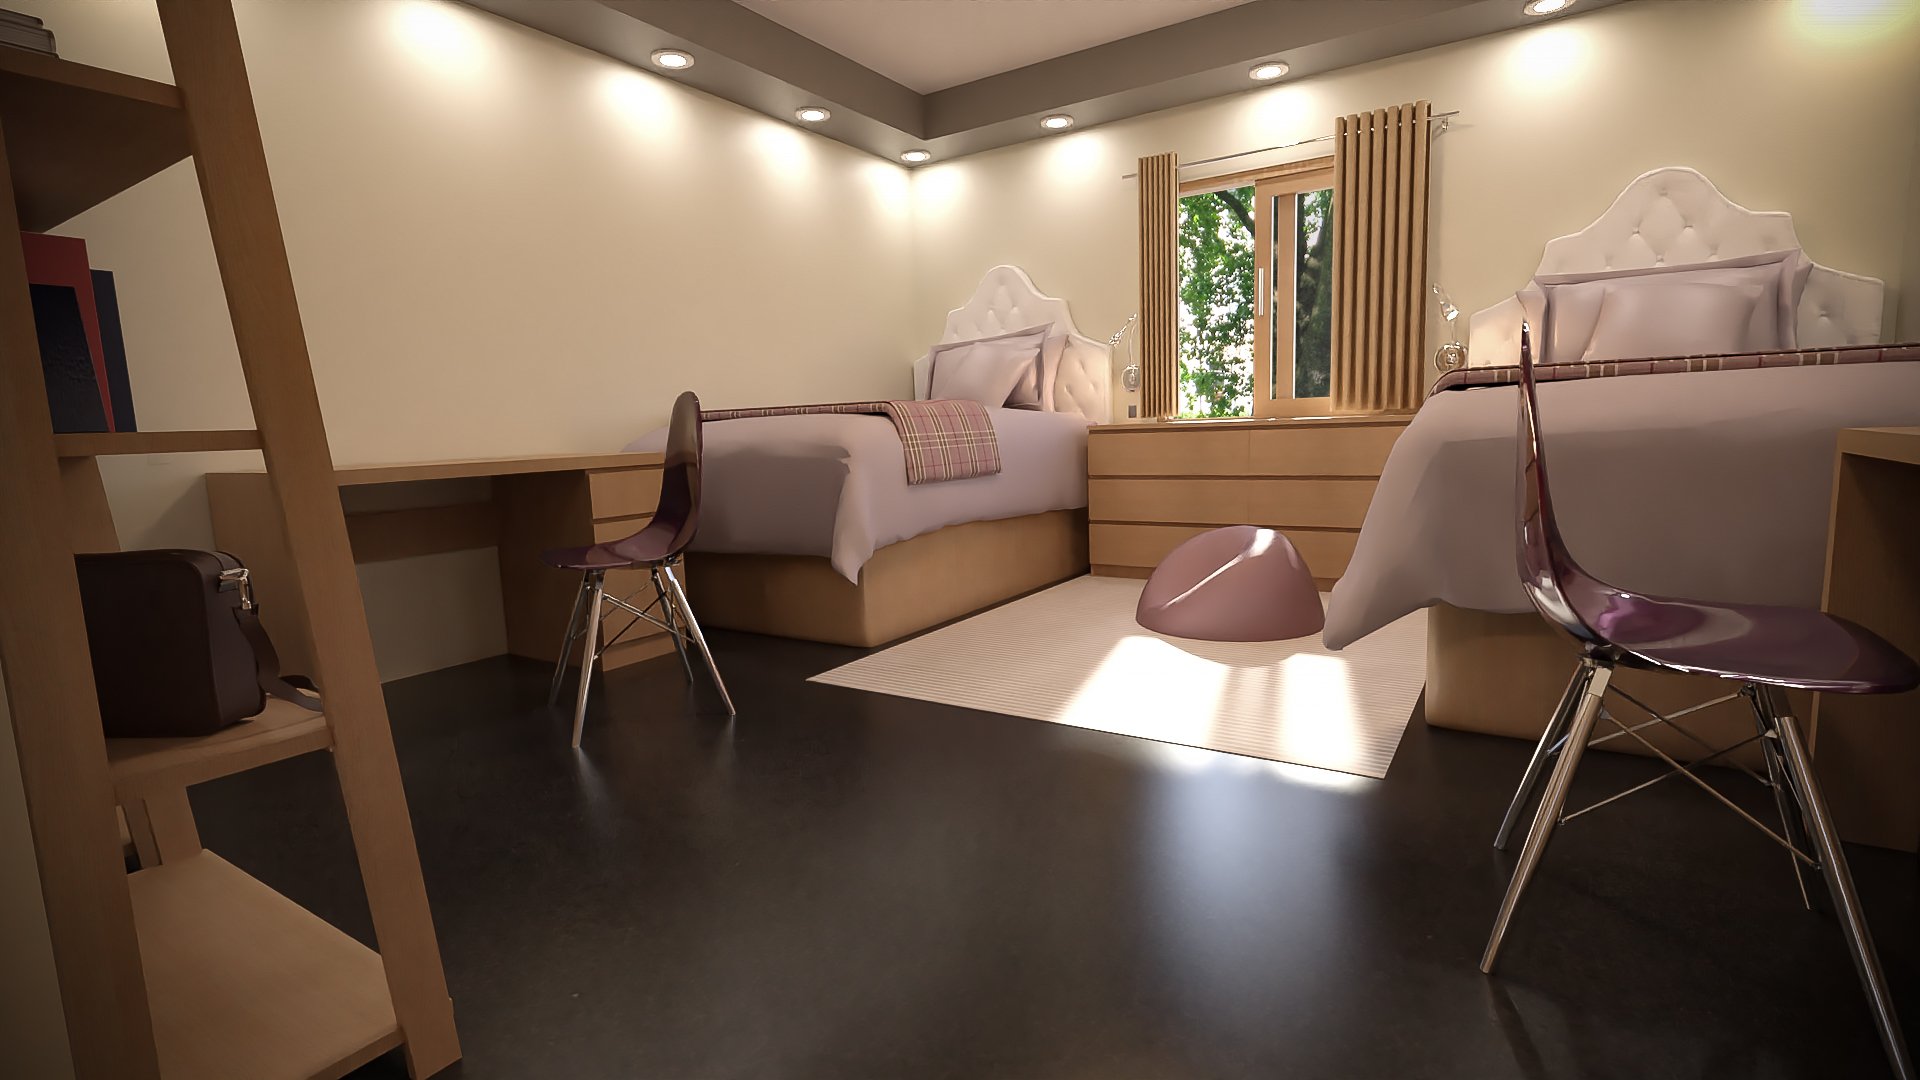 Girls Dorm Room by: Tesla3dCorp, 3D Models by Daz 3D